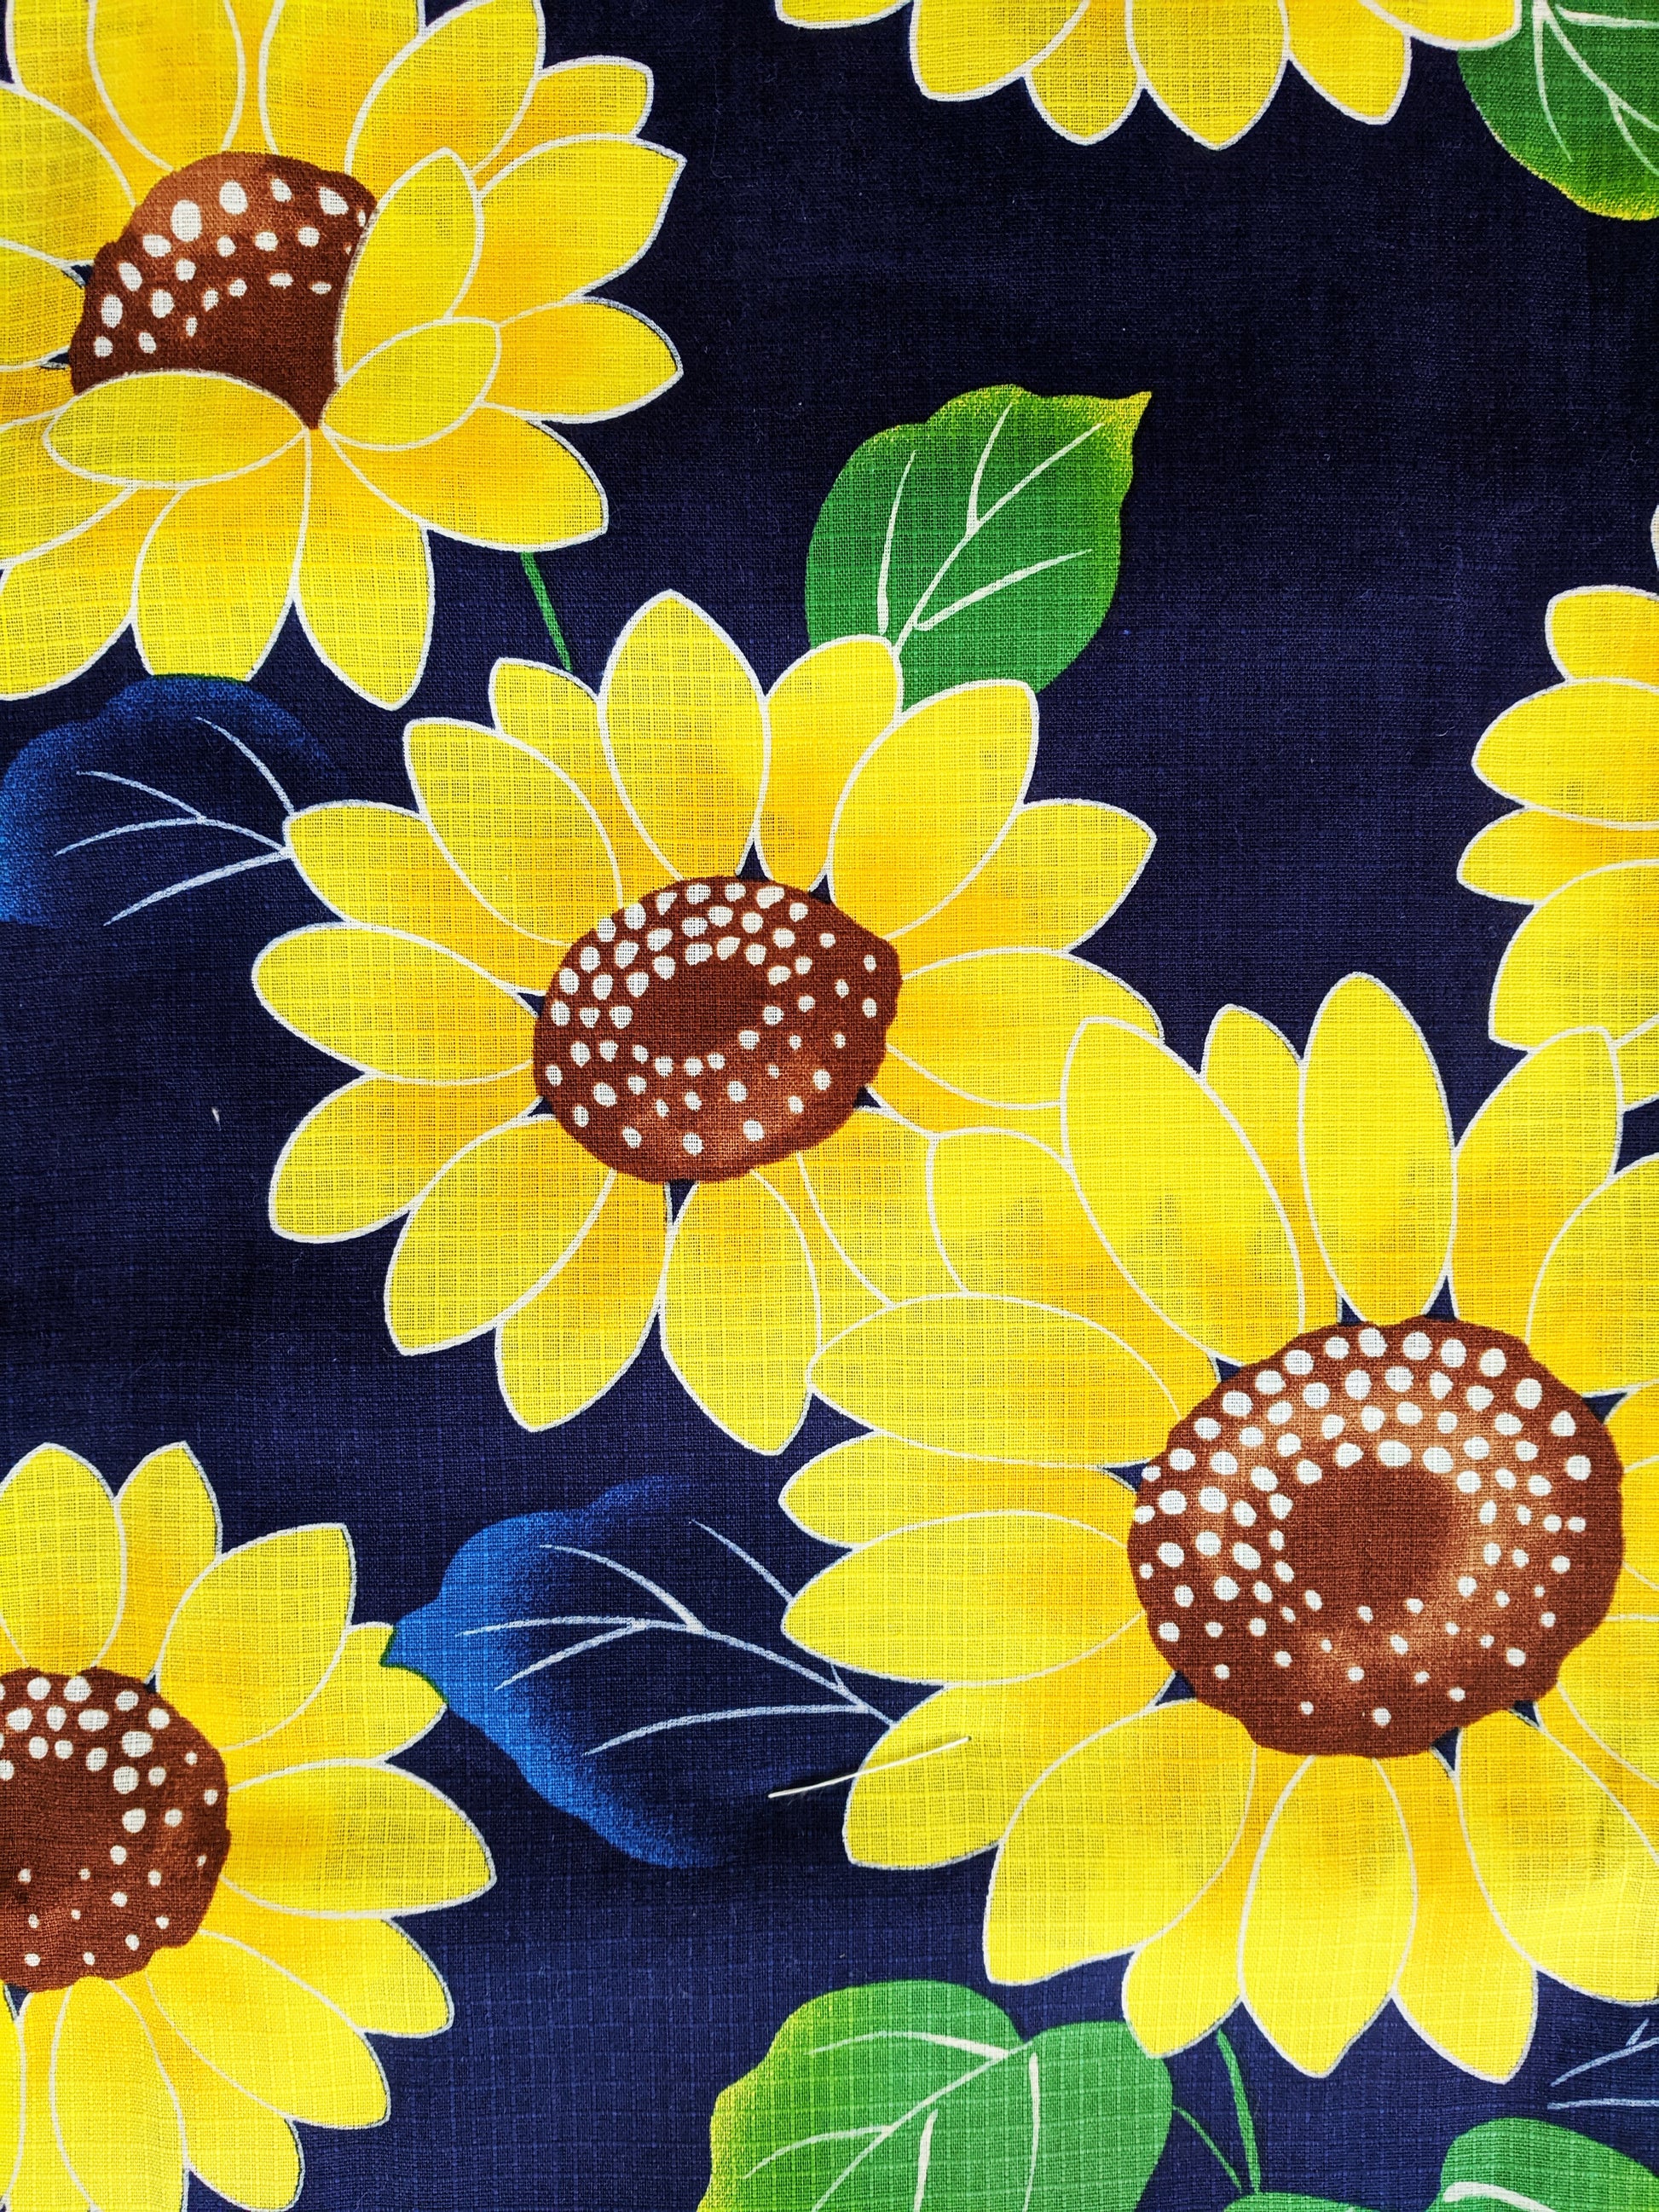 Yukata Kimono - Sunflowers Blue